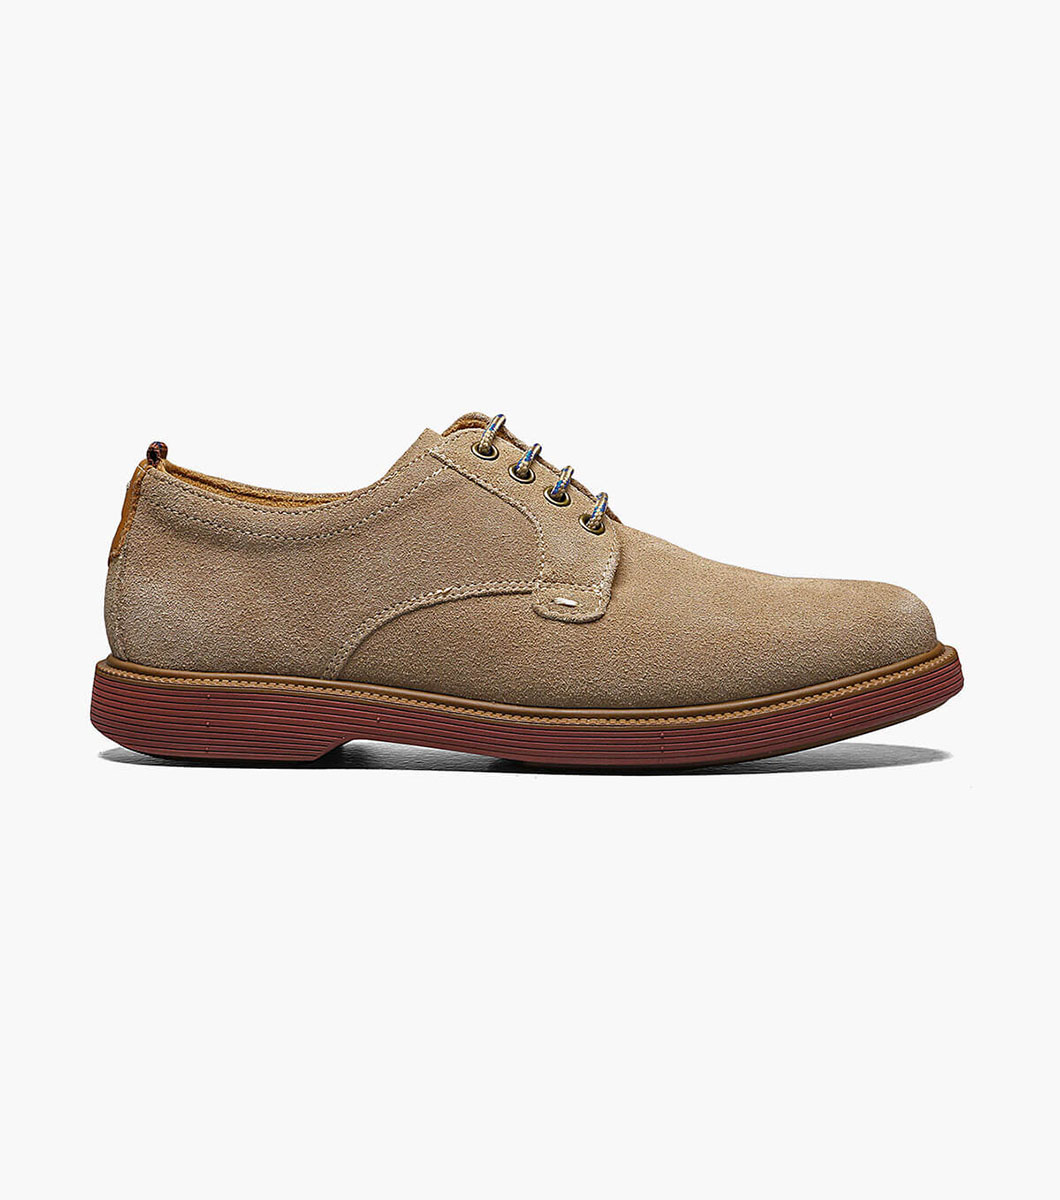 Supacush Jr. Boys Plain Toe Oxford Boy’s Casual Shoes | Florsheim.com